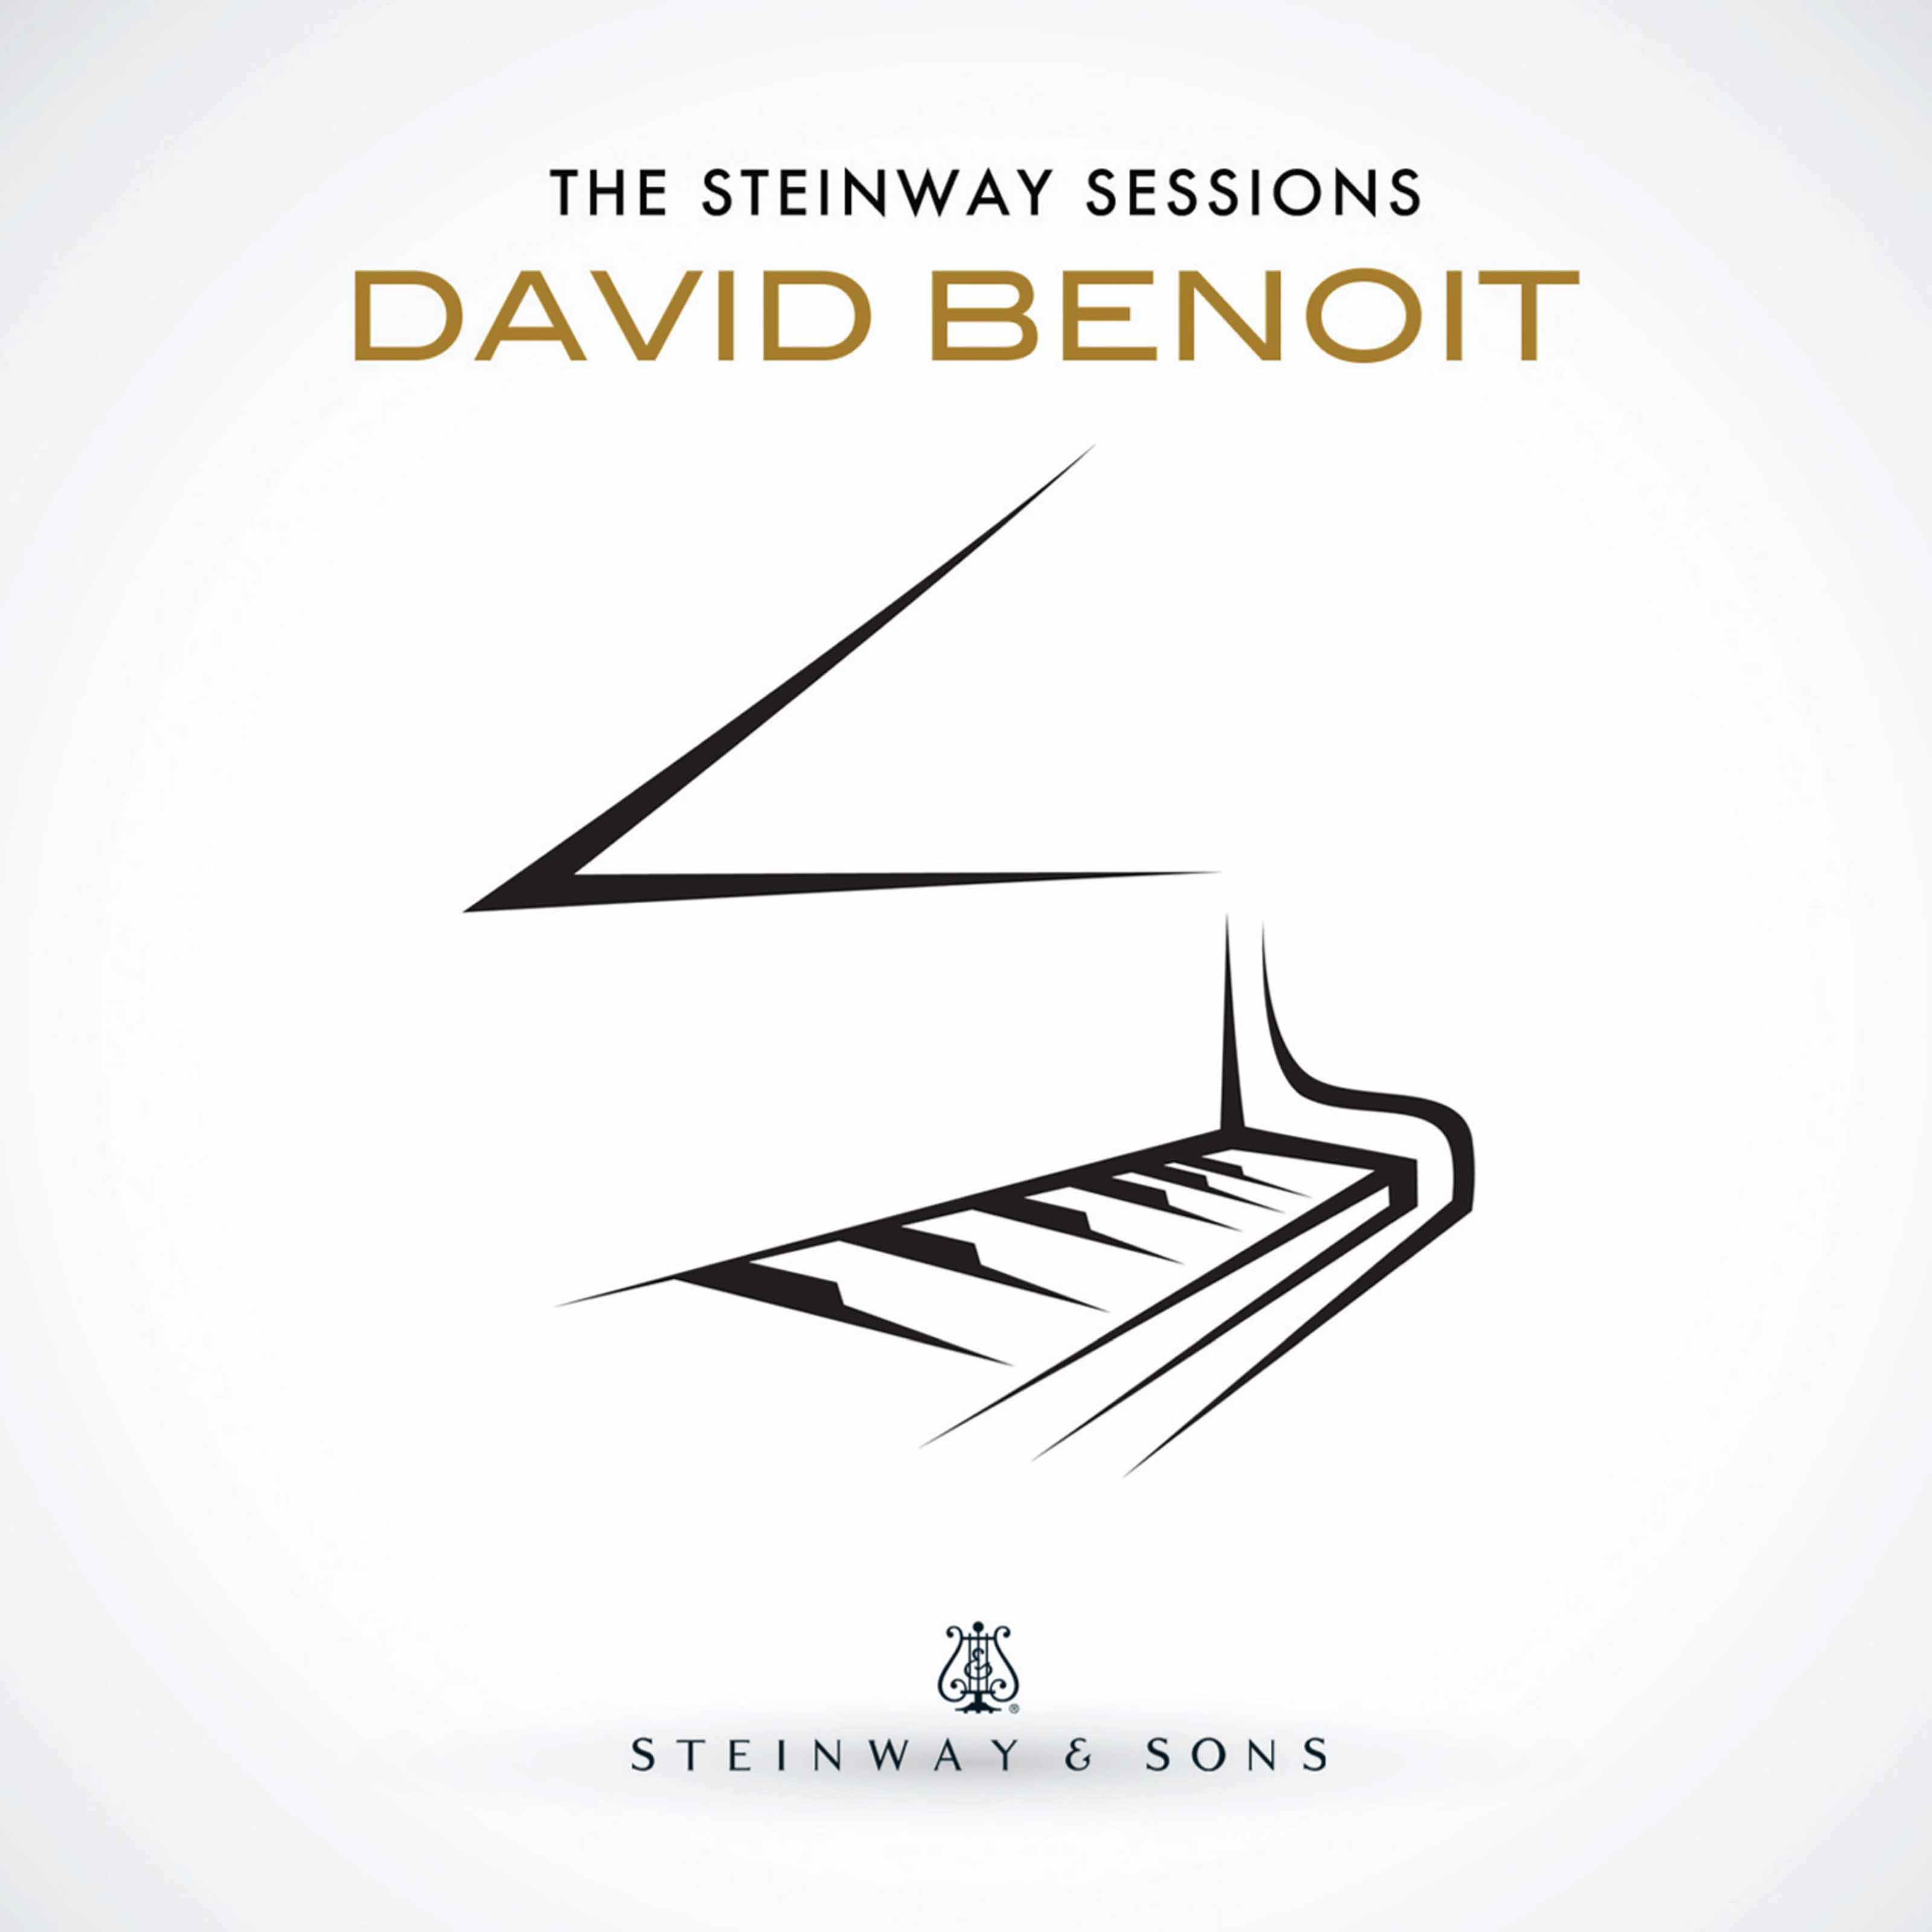 David Benoit - The Steinway Sessions (2017) [HDTracks FLAC 24bit/96kHz]